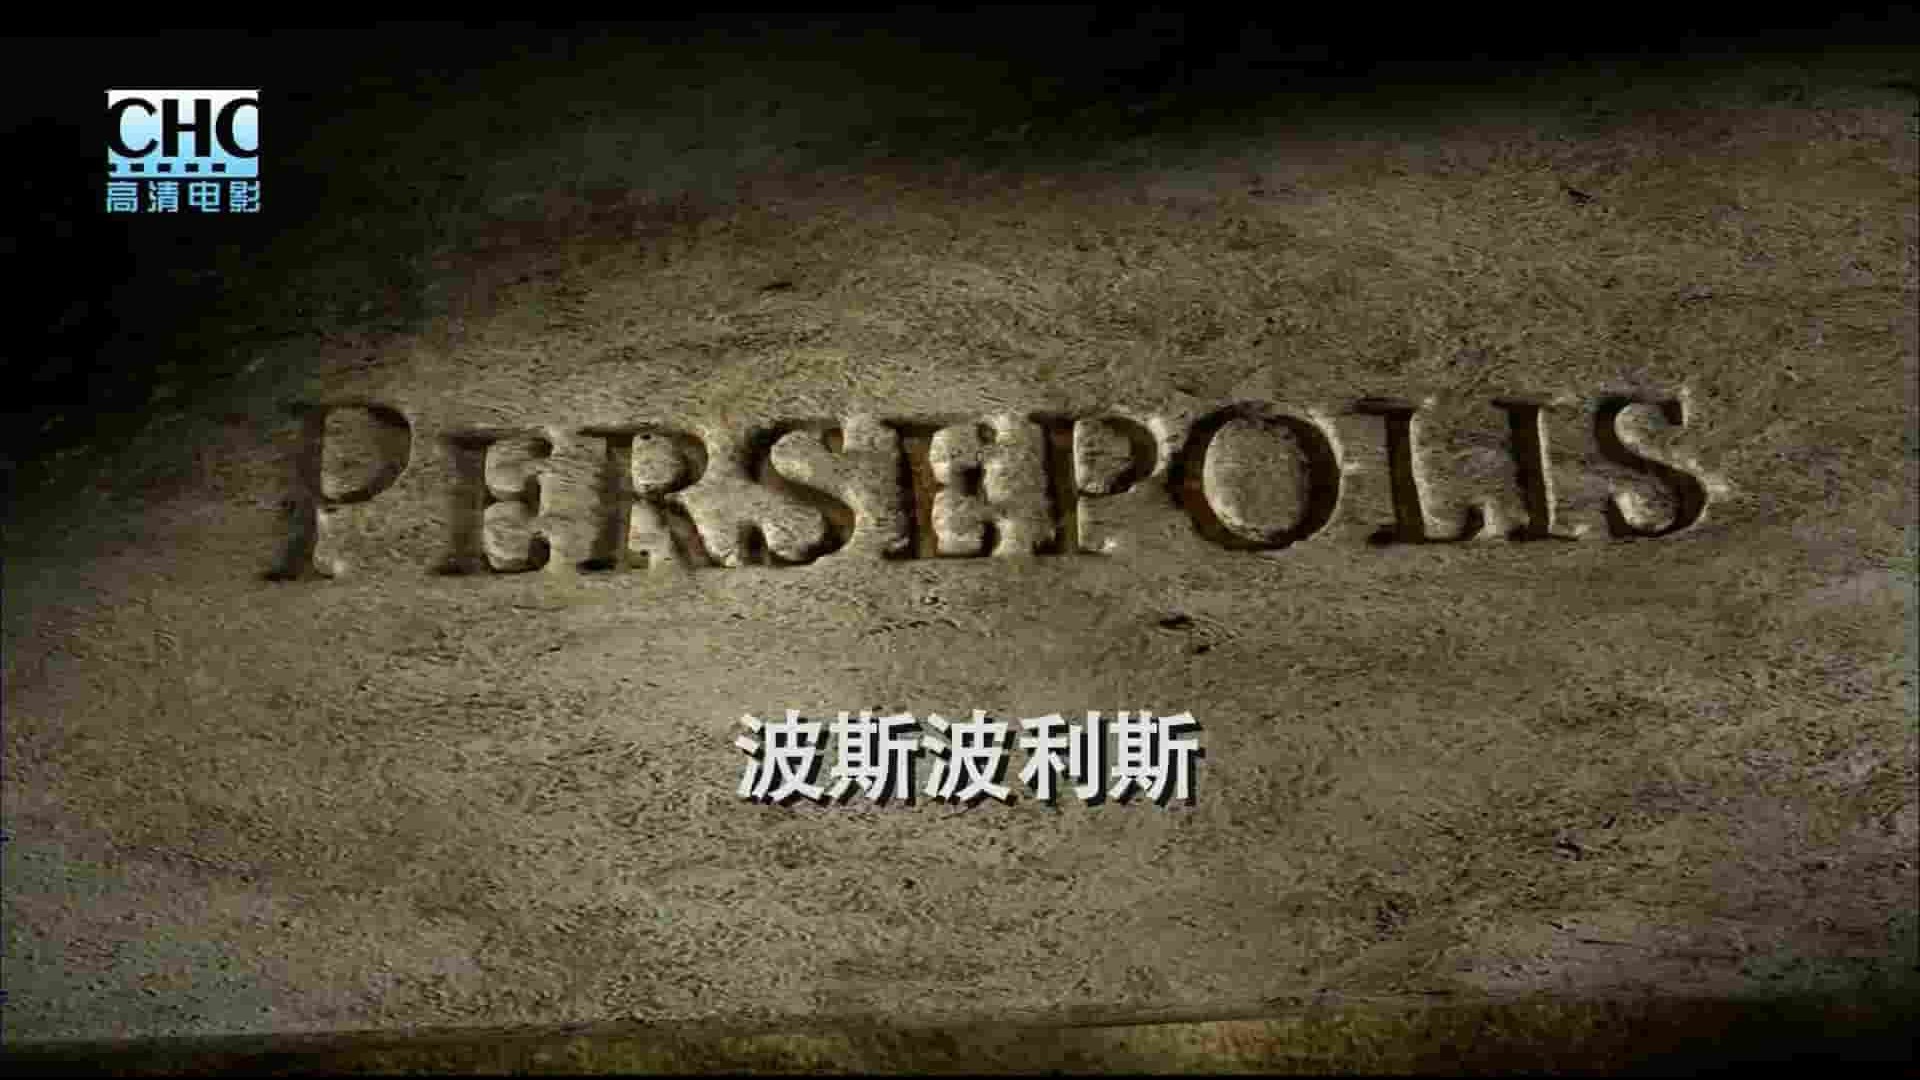 CHC纪录片《波斯波利斯 Persepolis》全1集 德语中字 1080P高清网盘下载 